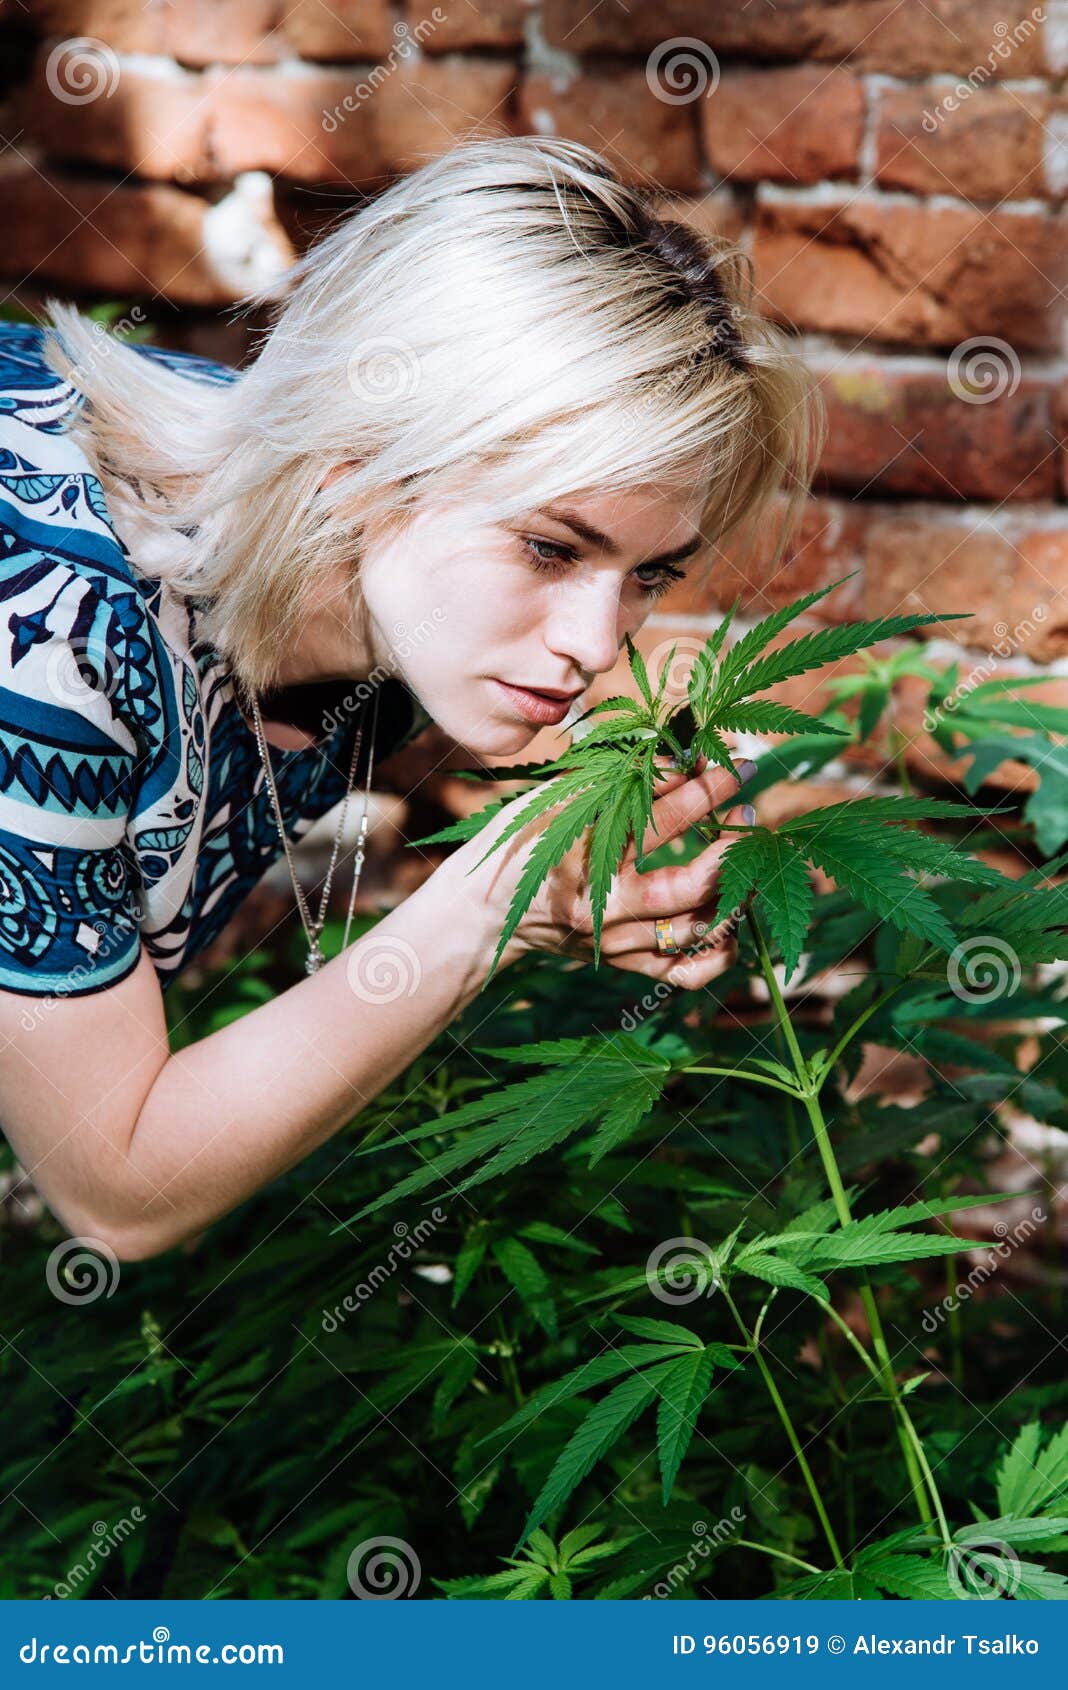 Картинки девушки конопля марихуану курить вредно